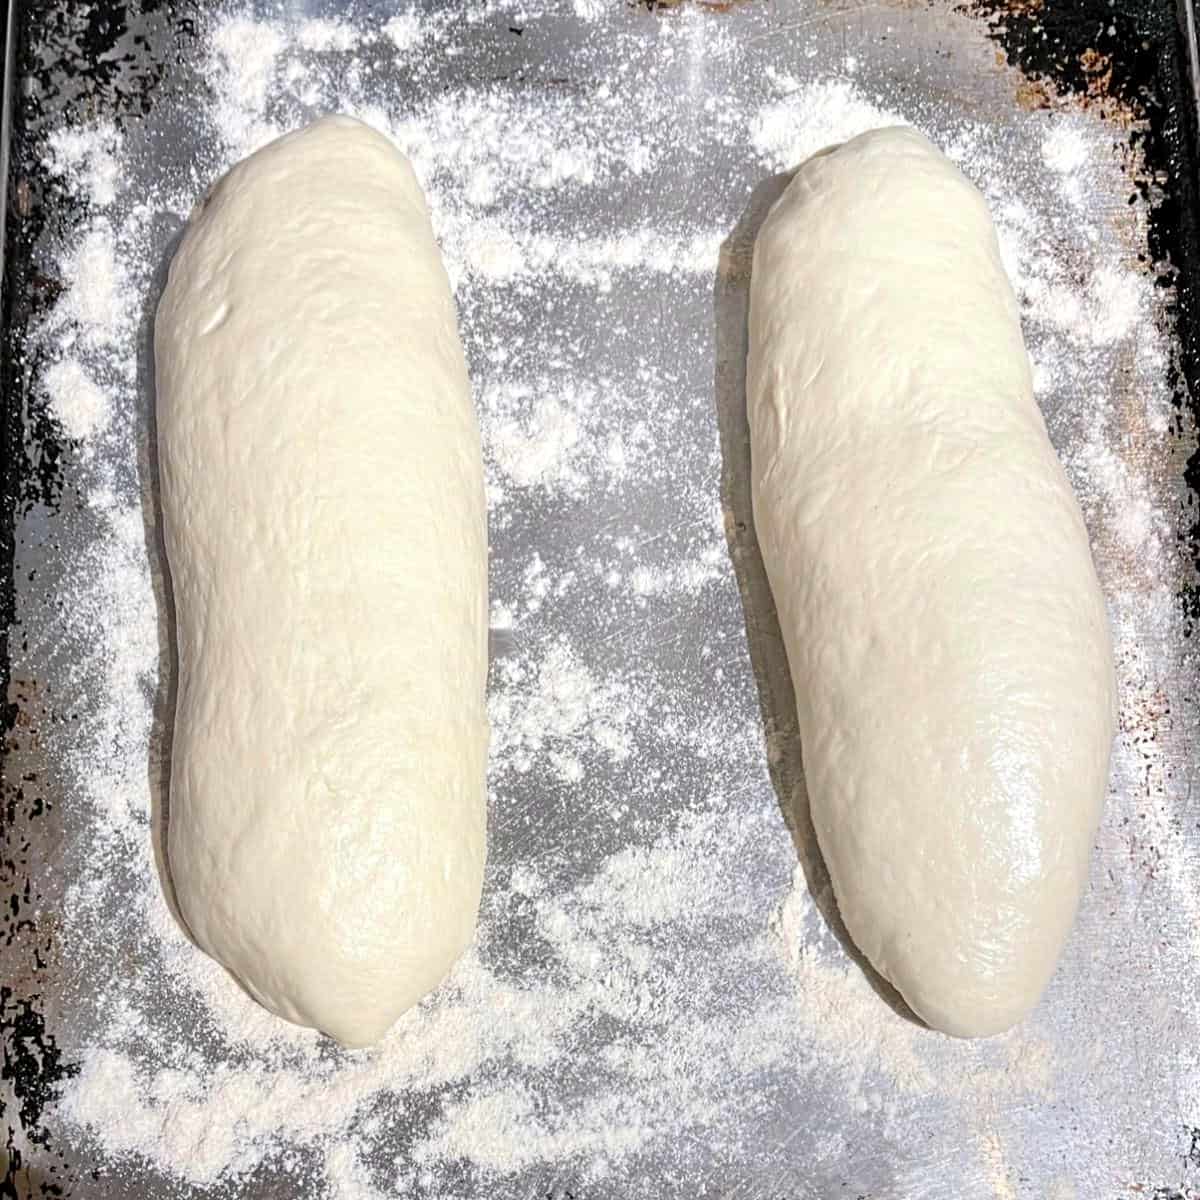 Italian bread loaves on baking sheet before rising.